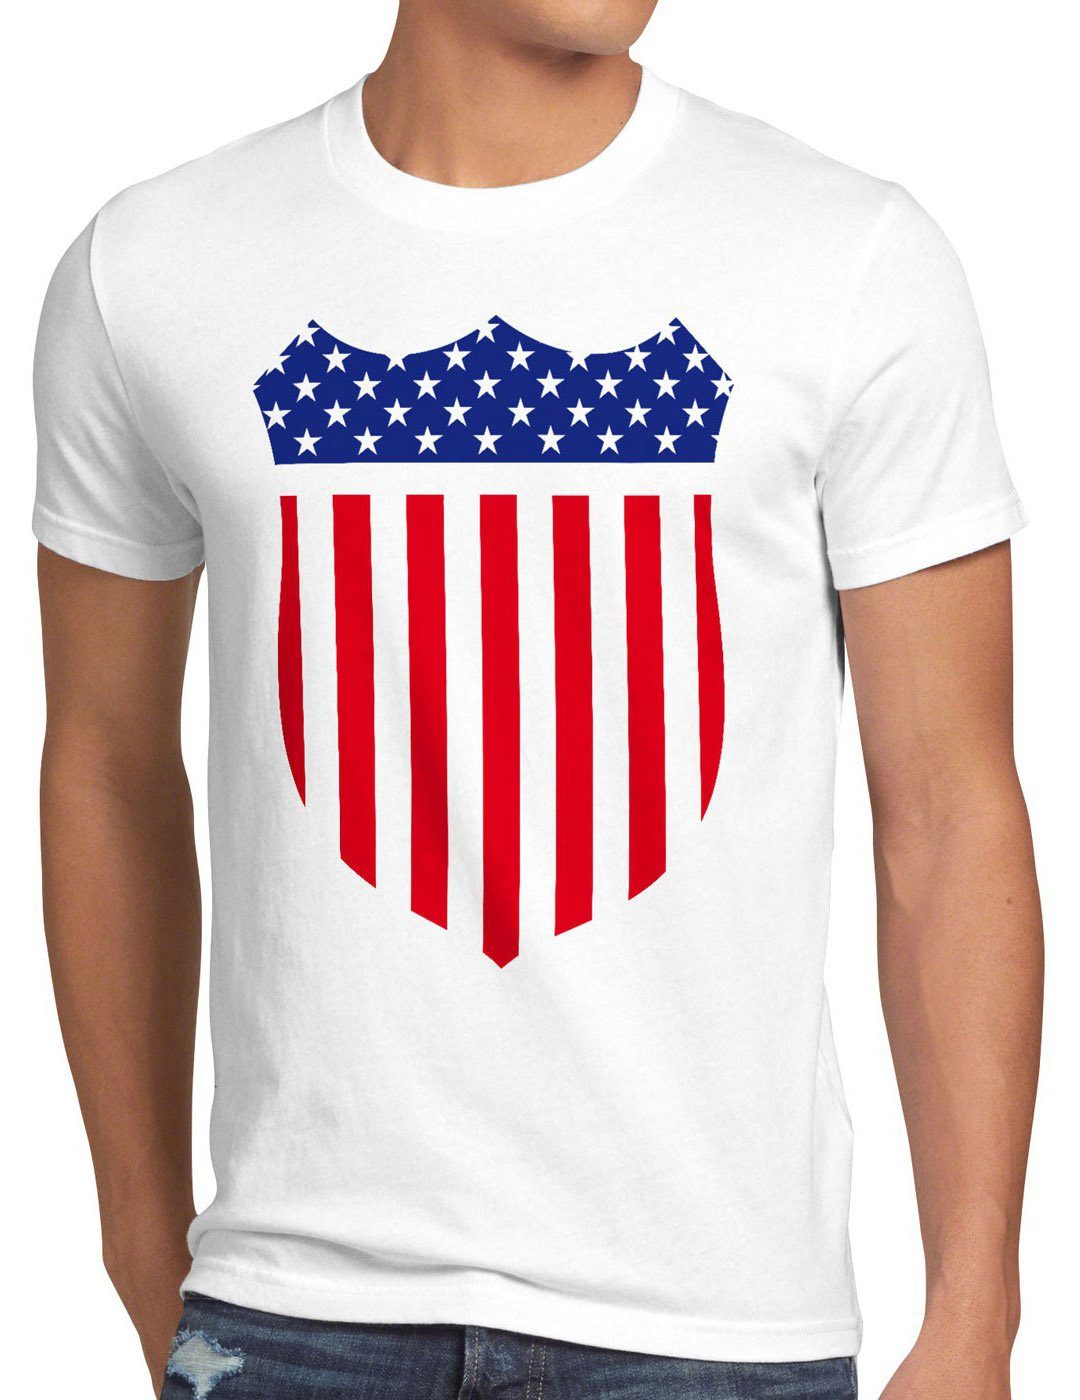 style3 Print-Shirt Herren T-Shirt USA Amerika Medal Medaille Wappen Flagge sheriff stars stripes us weiß